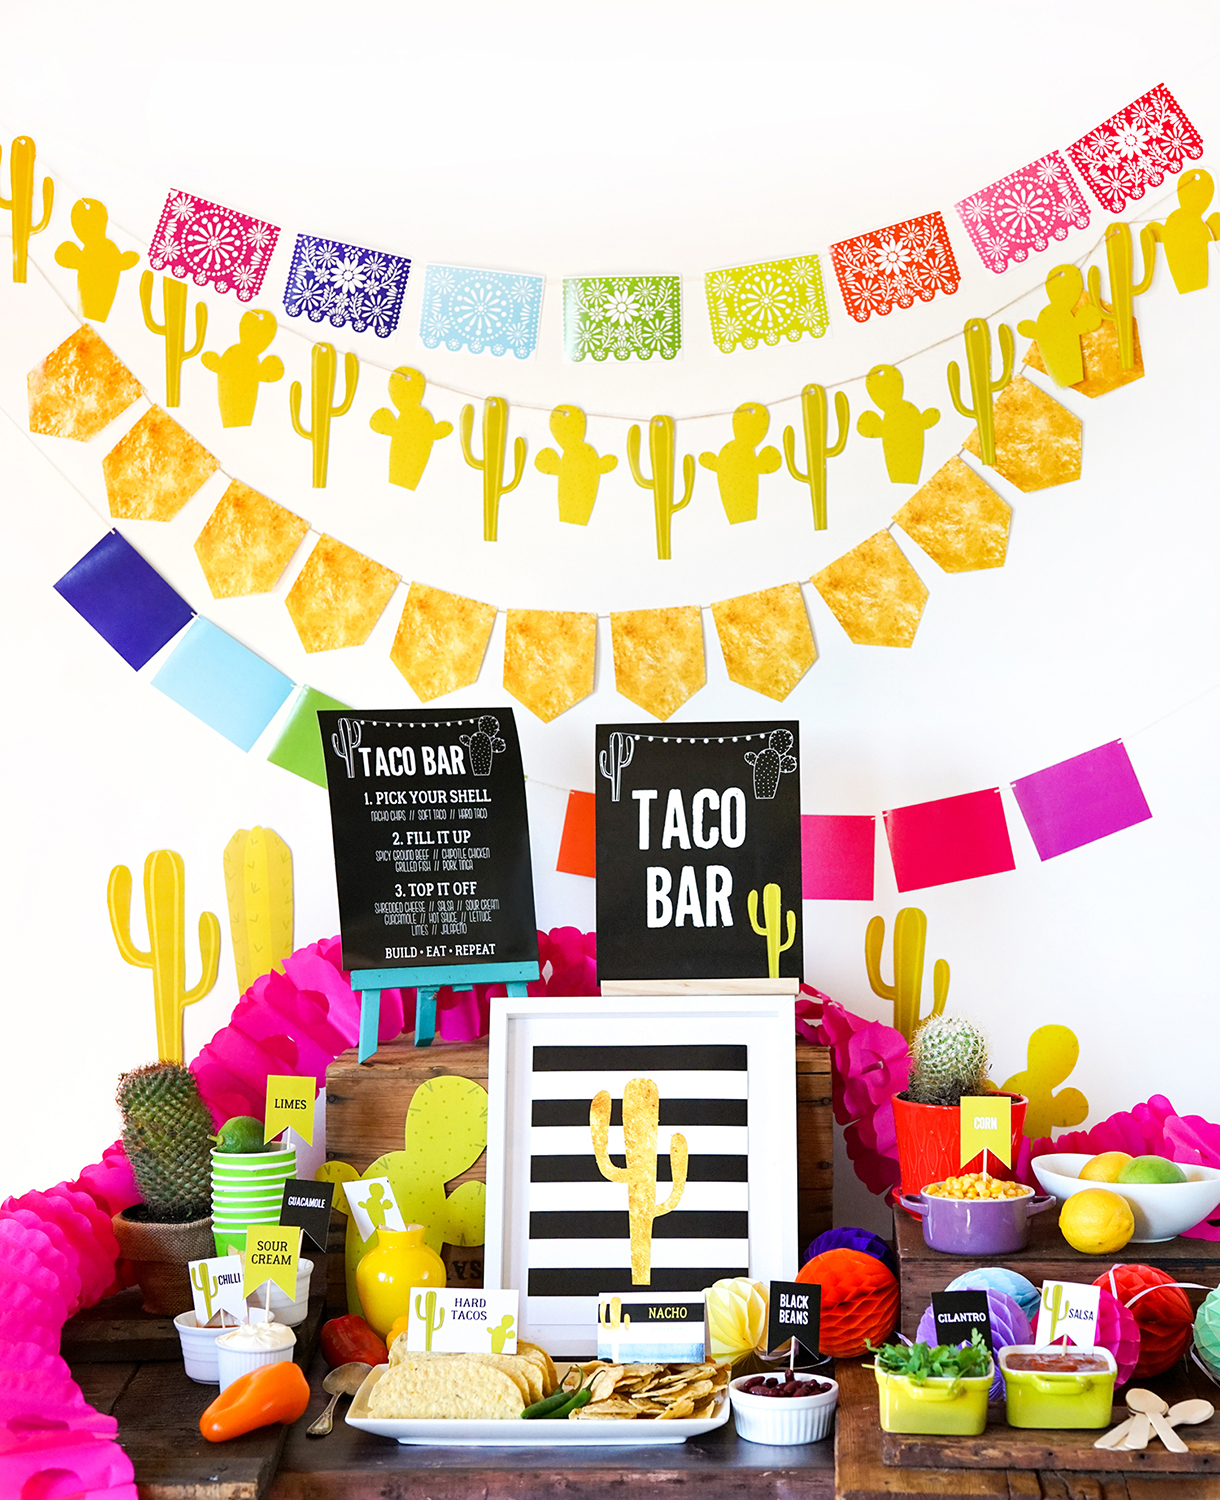 Fiesta taco Bar Food and Decor ideas